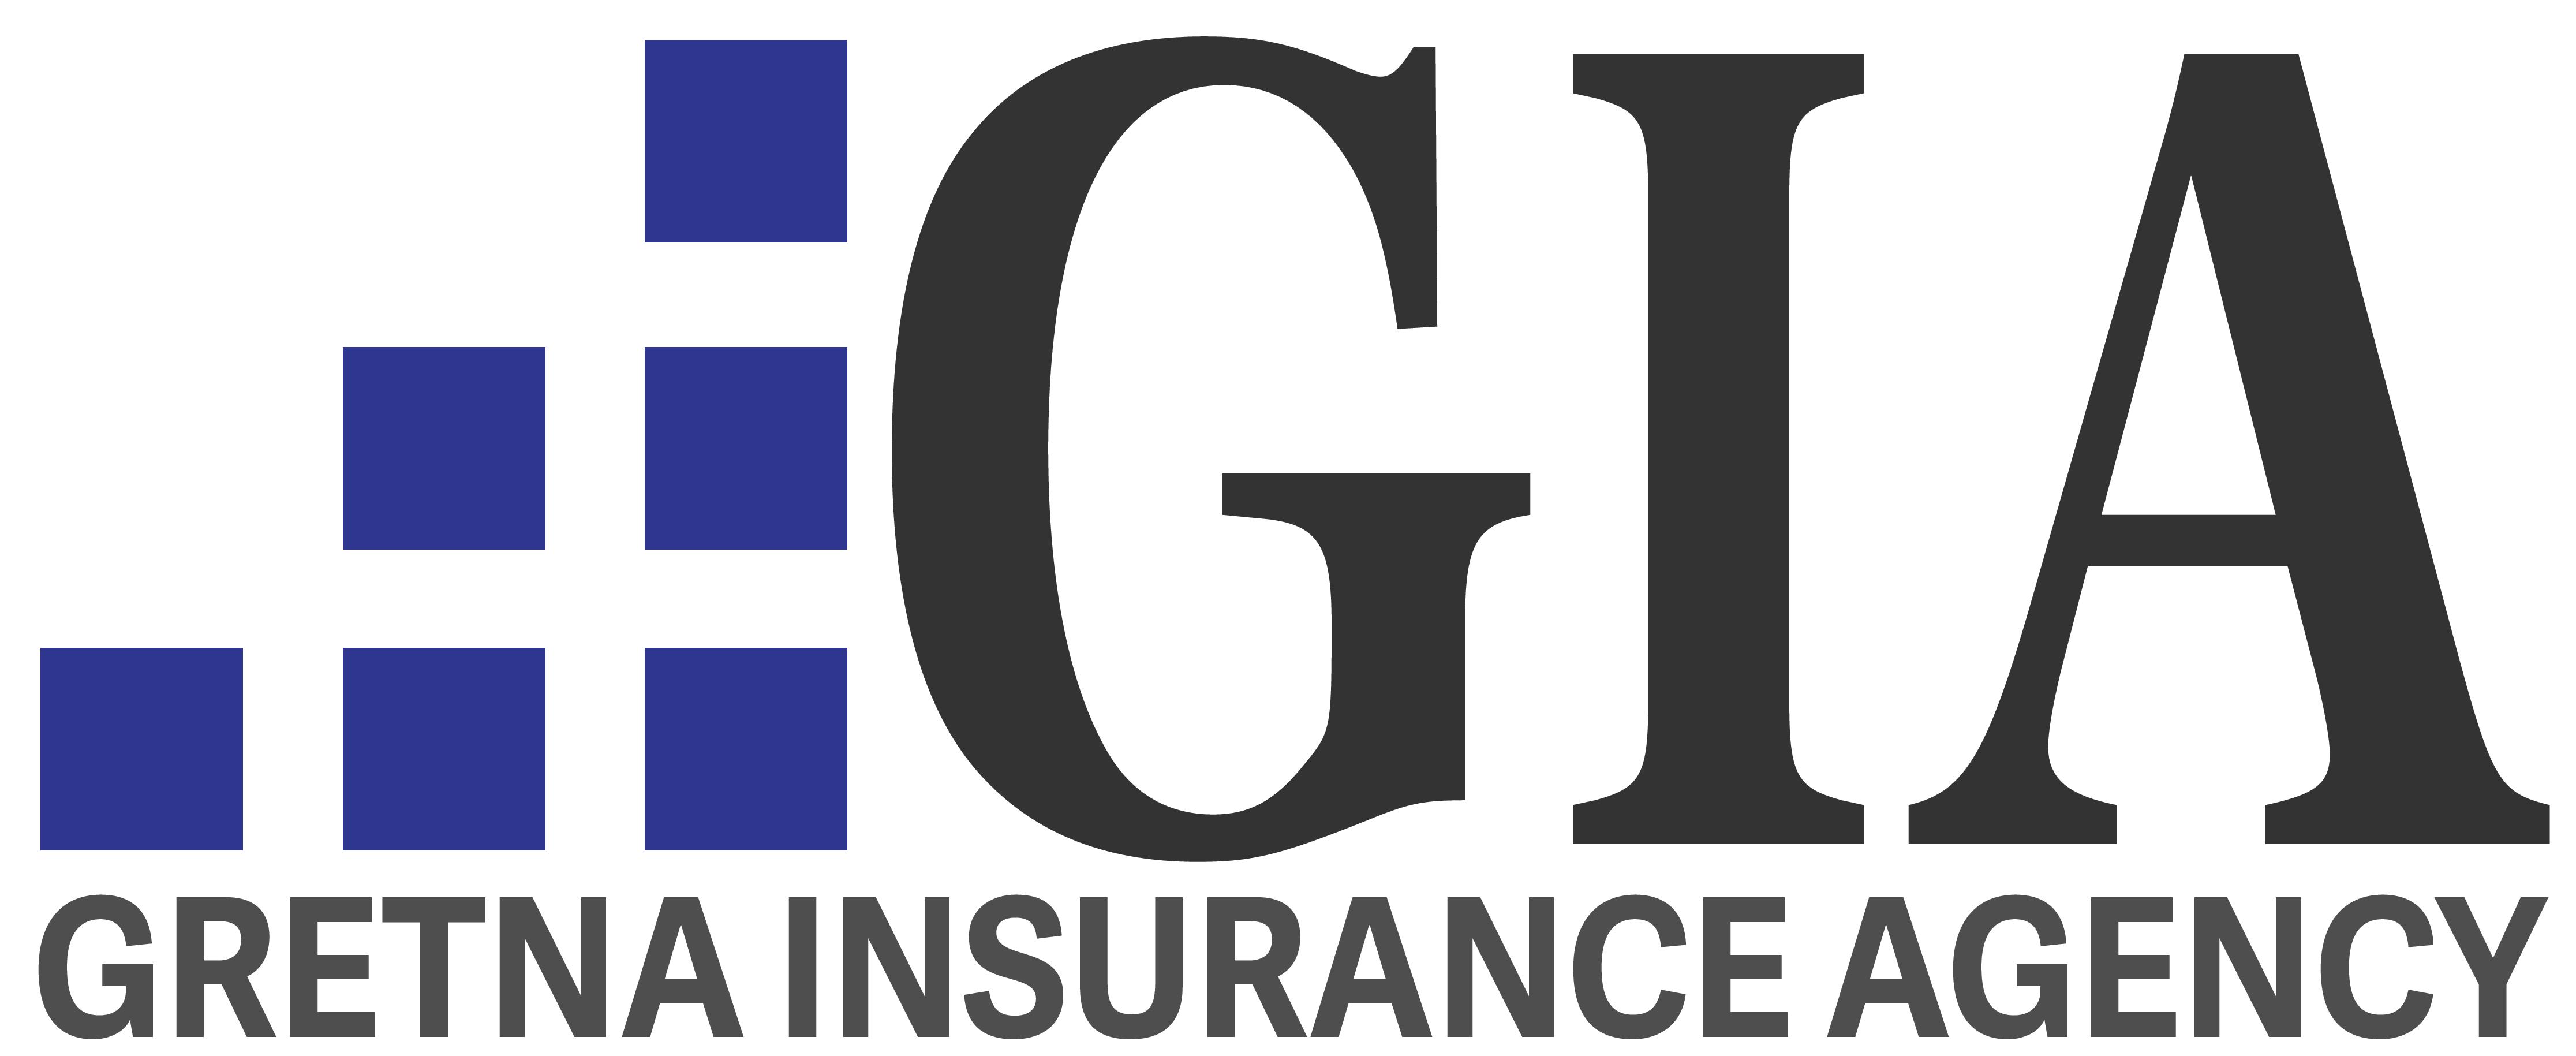 Gretna Insurance Agency